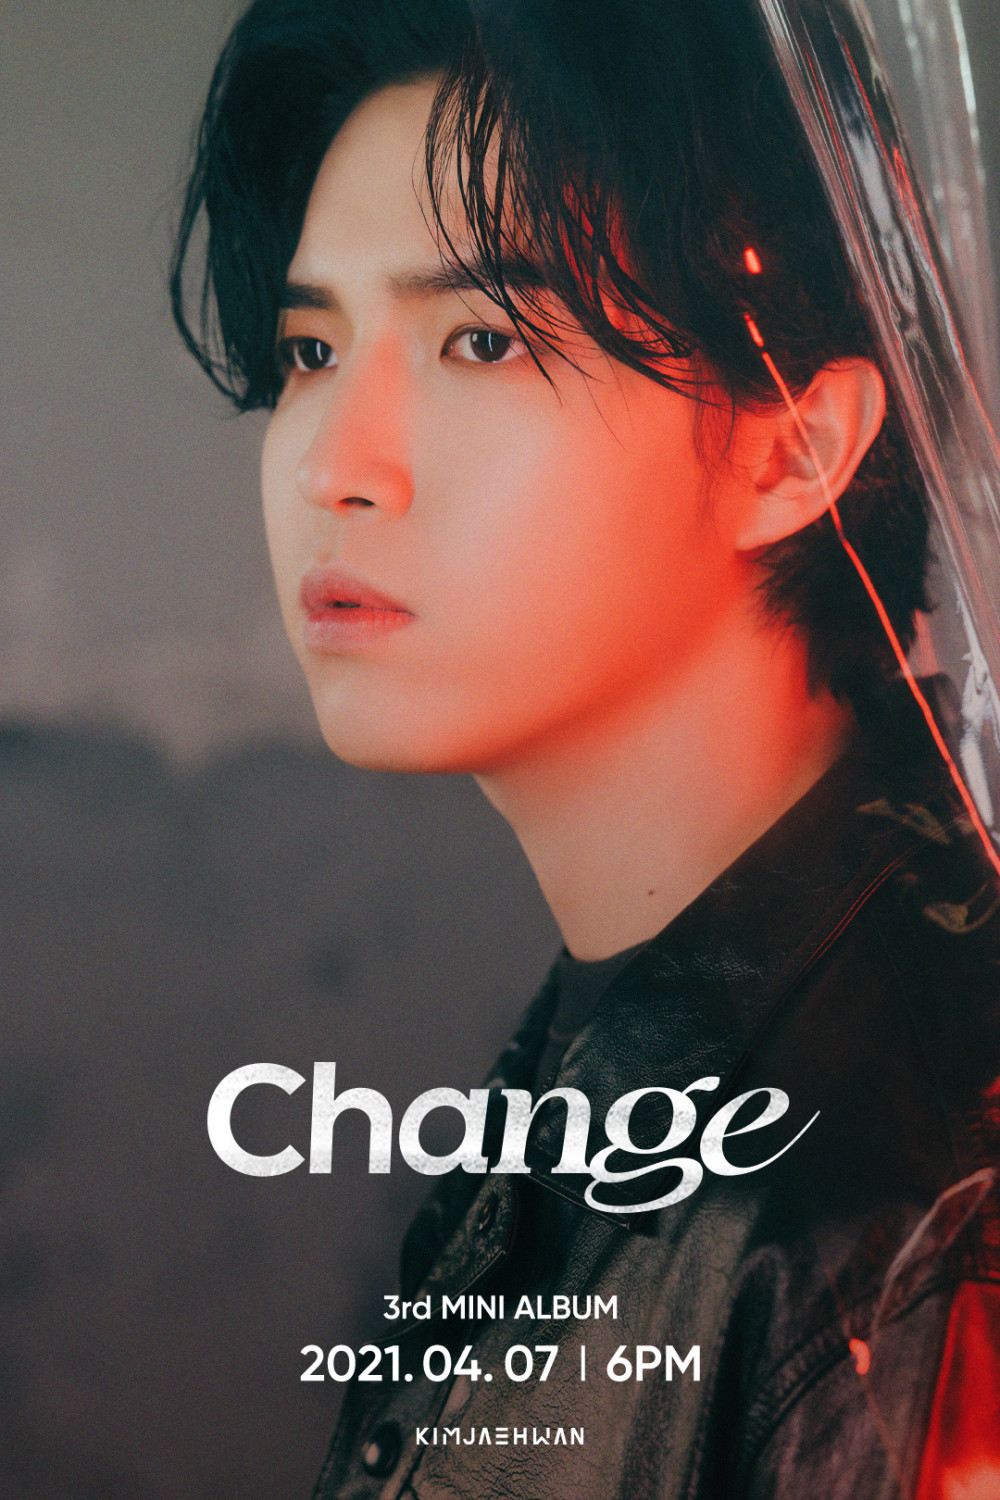 [Камбэк] Ким Джэ Хван альбом "Change": музыкальный клип "I Wouldn't Look for You"